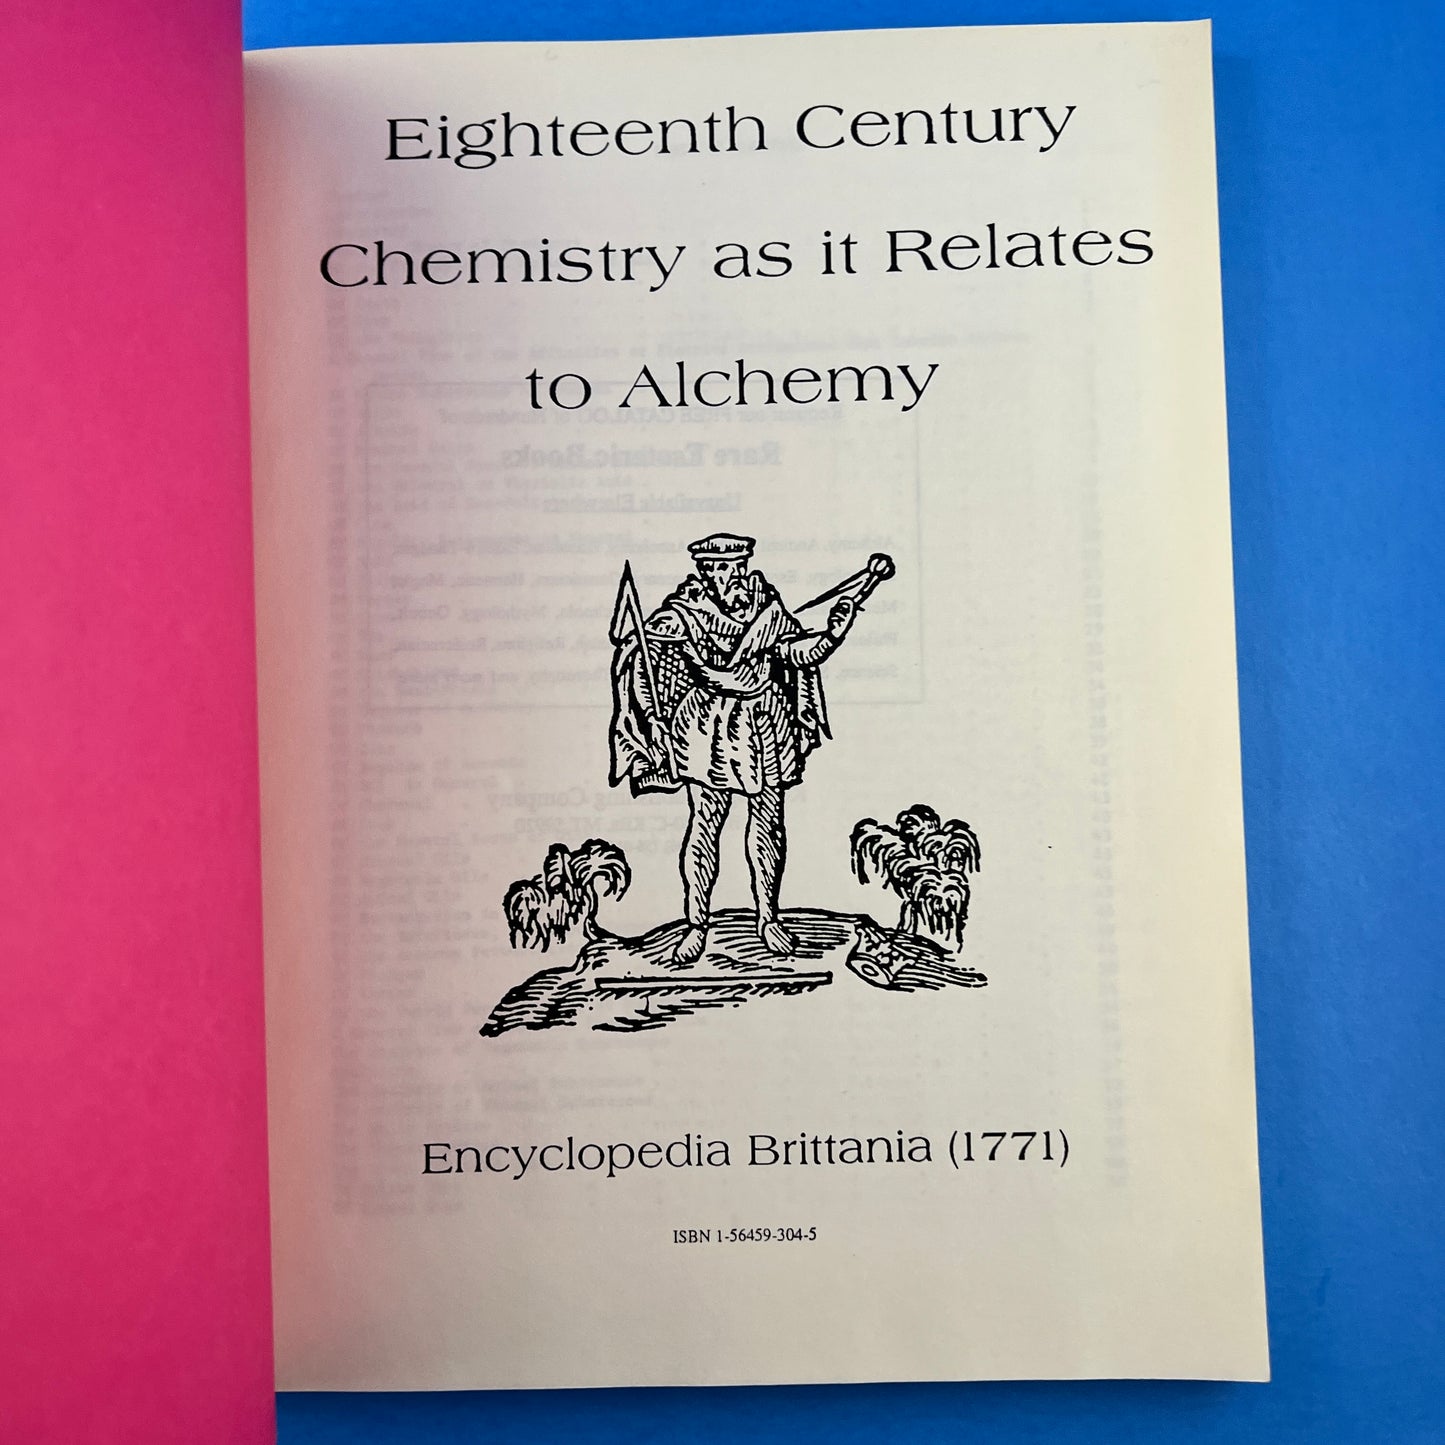 Eighteenth Century Chemistry as it Relates to Alchemy